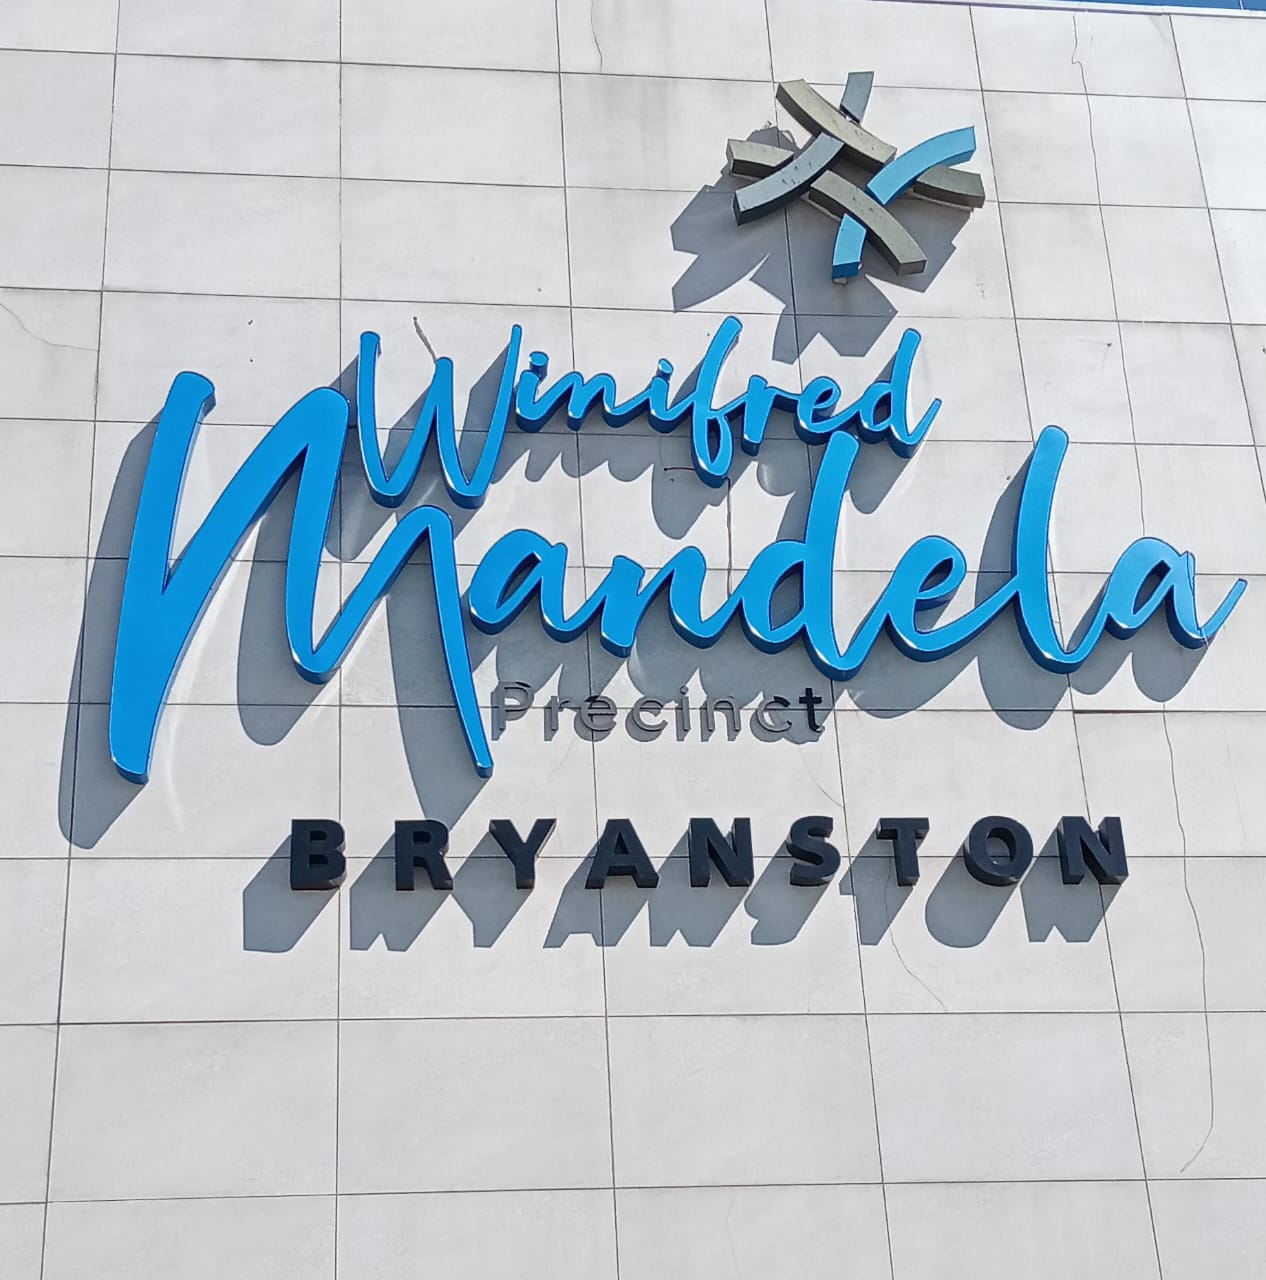 Transformation In Johannesburg: Nicolway Centre Becomes Winifred Mandela Precinct 6